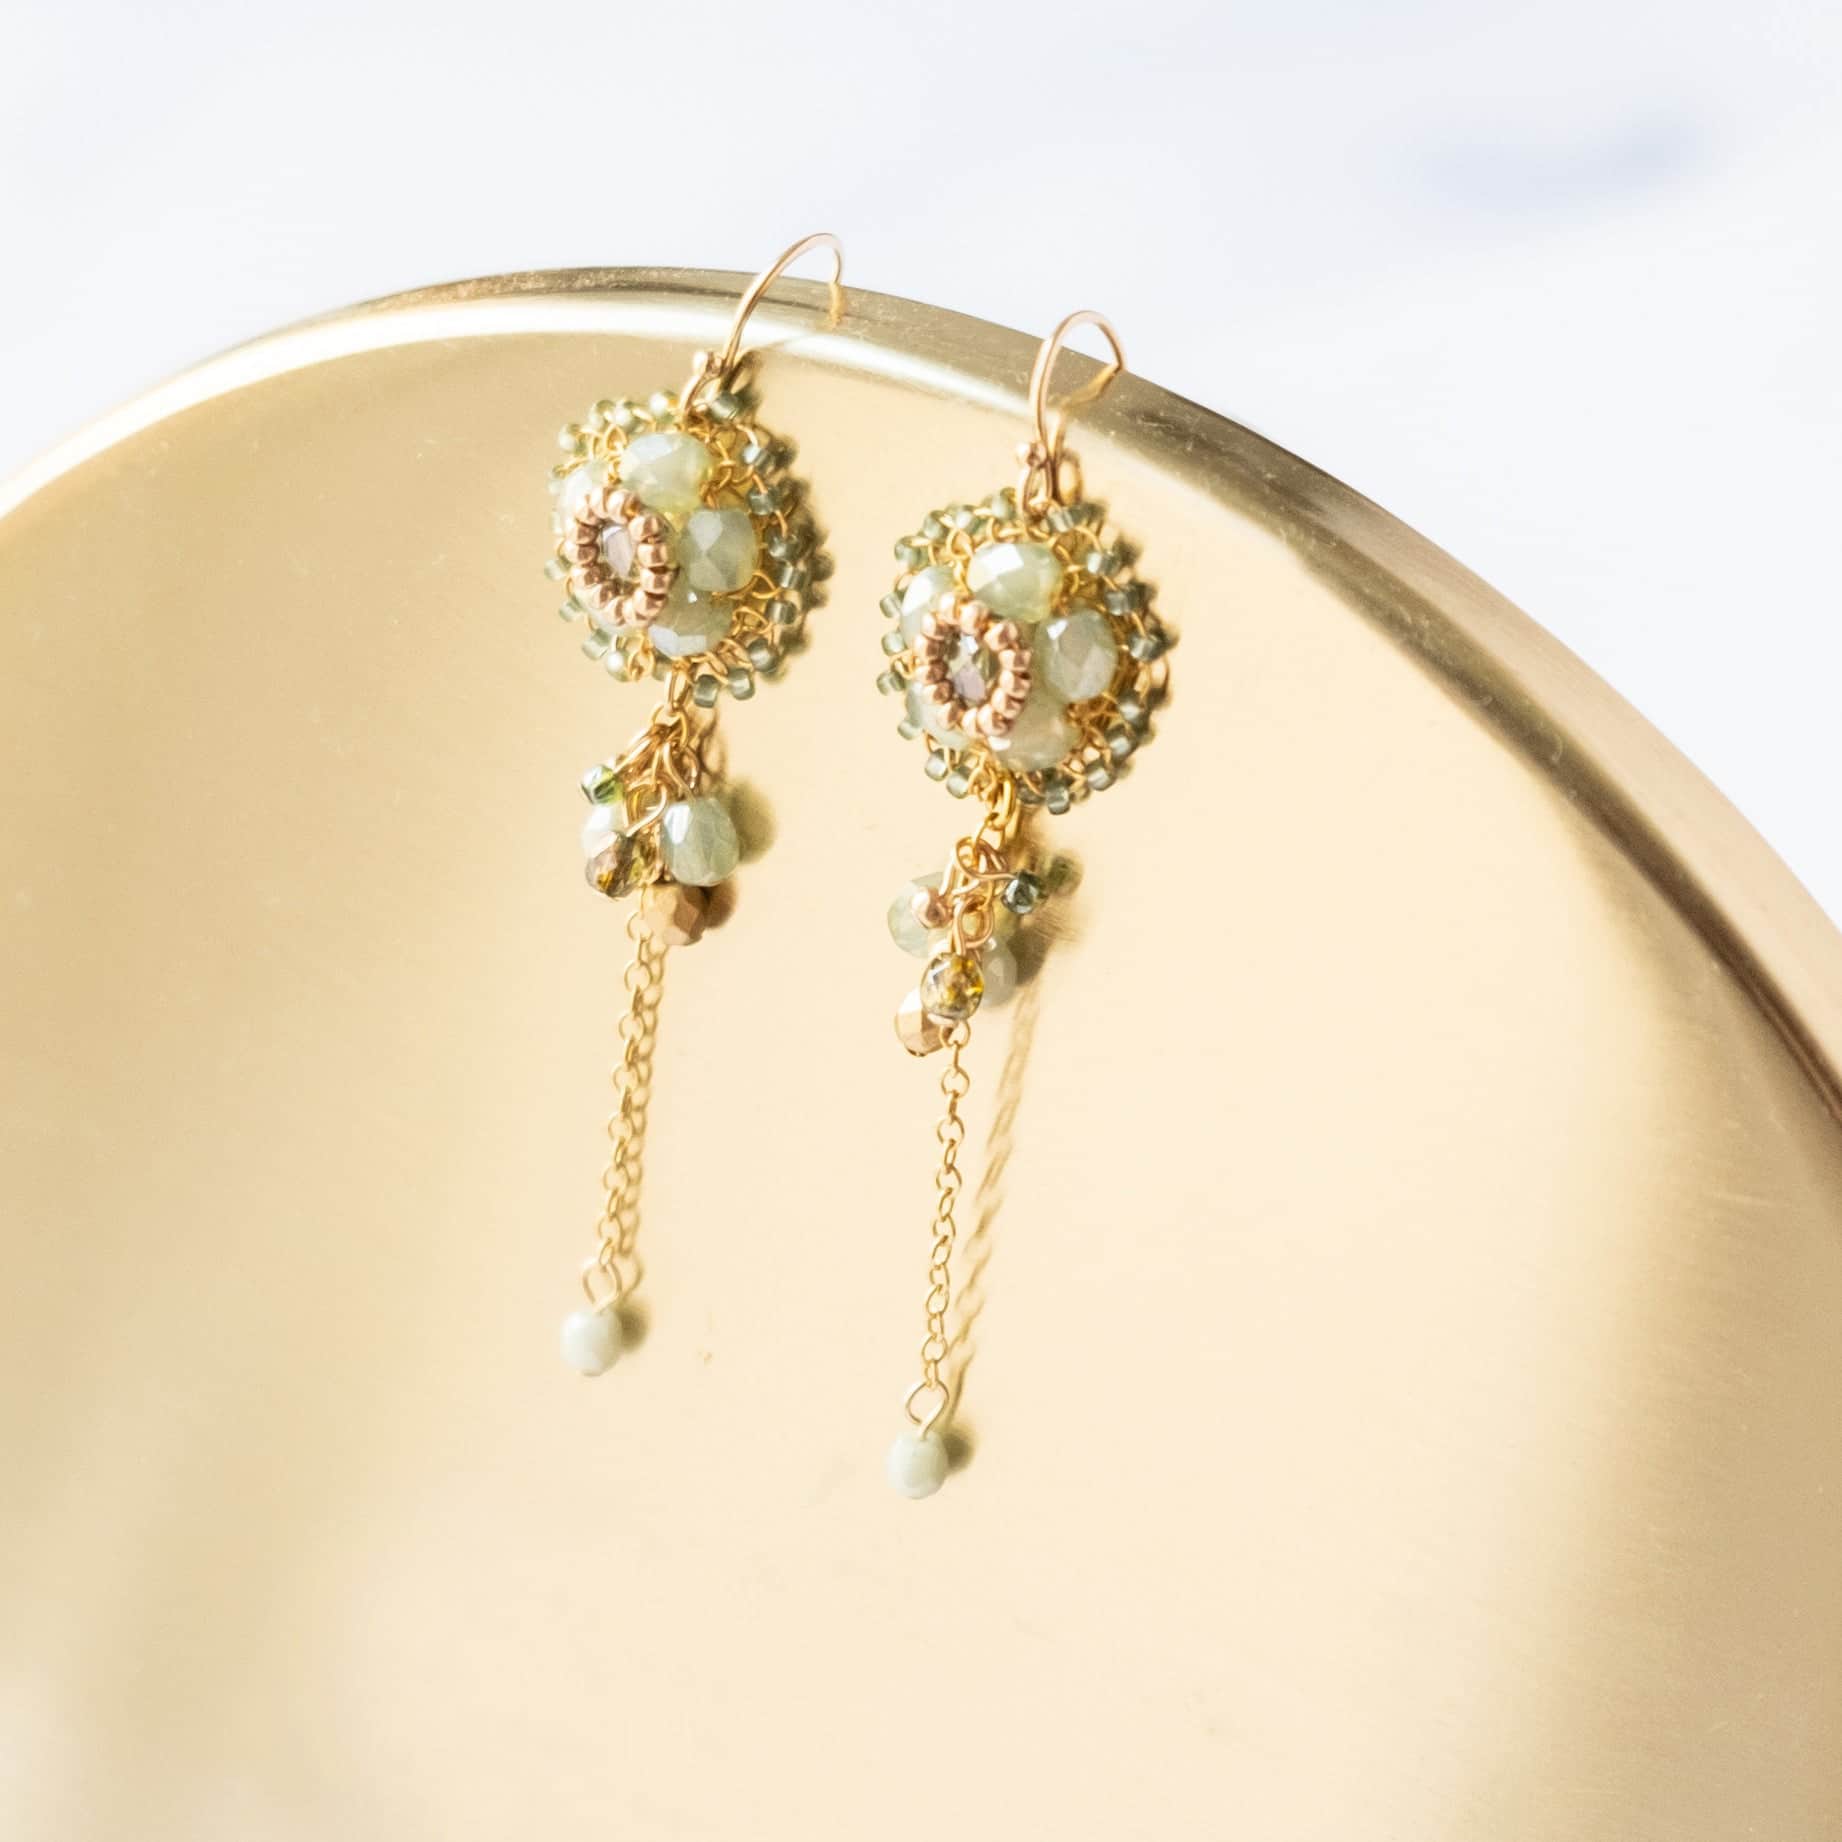 Fiori drop earrings in soft green - Judith Brown Bridal